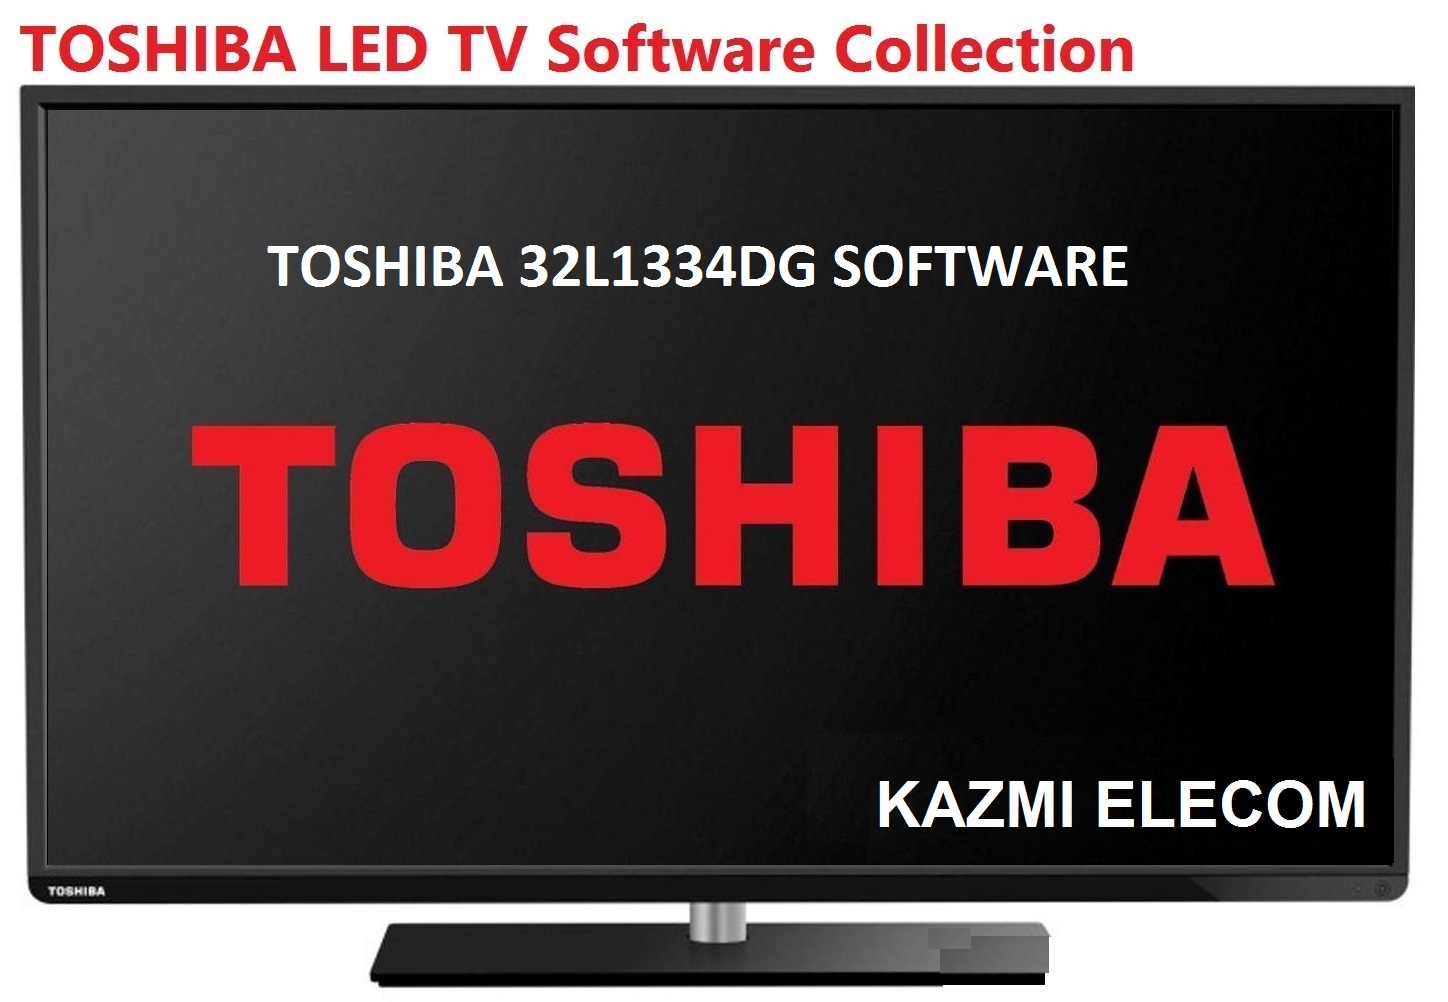 Toshiba 32L1334Dg